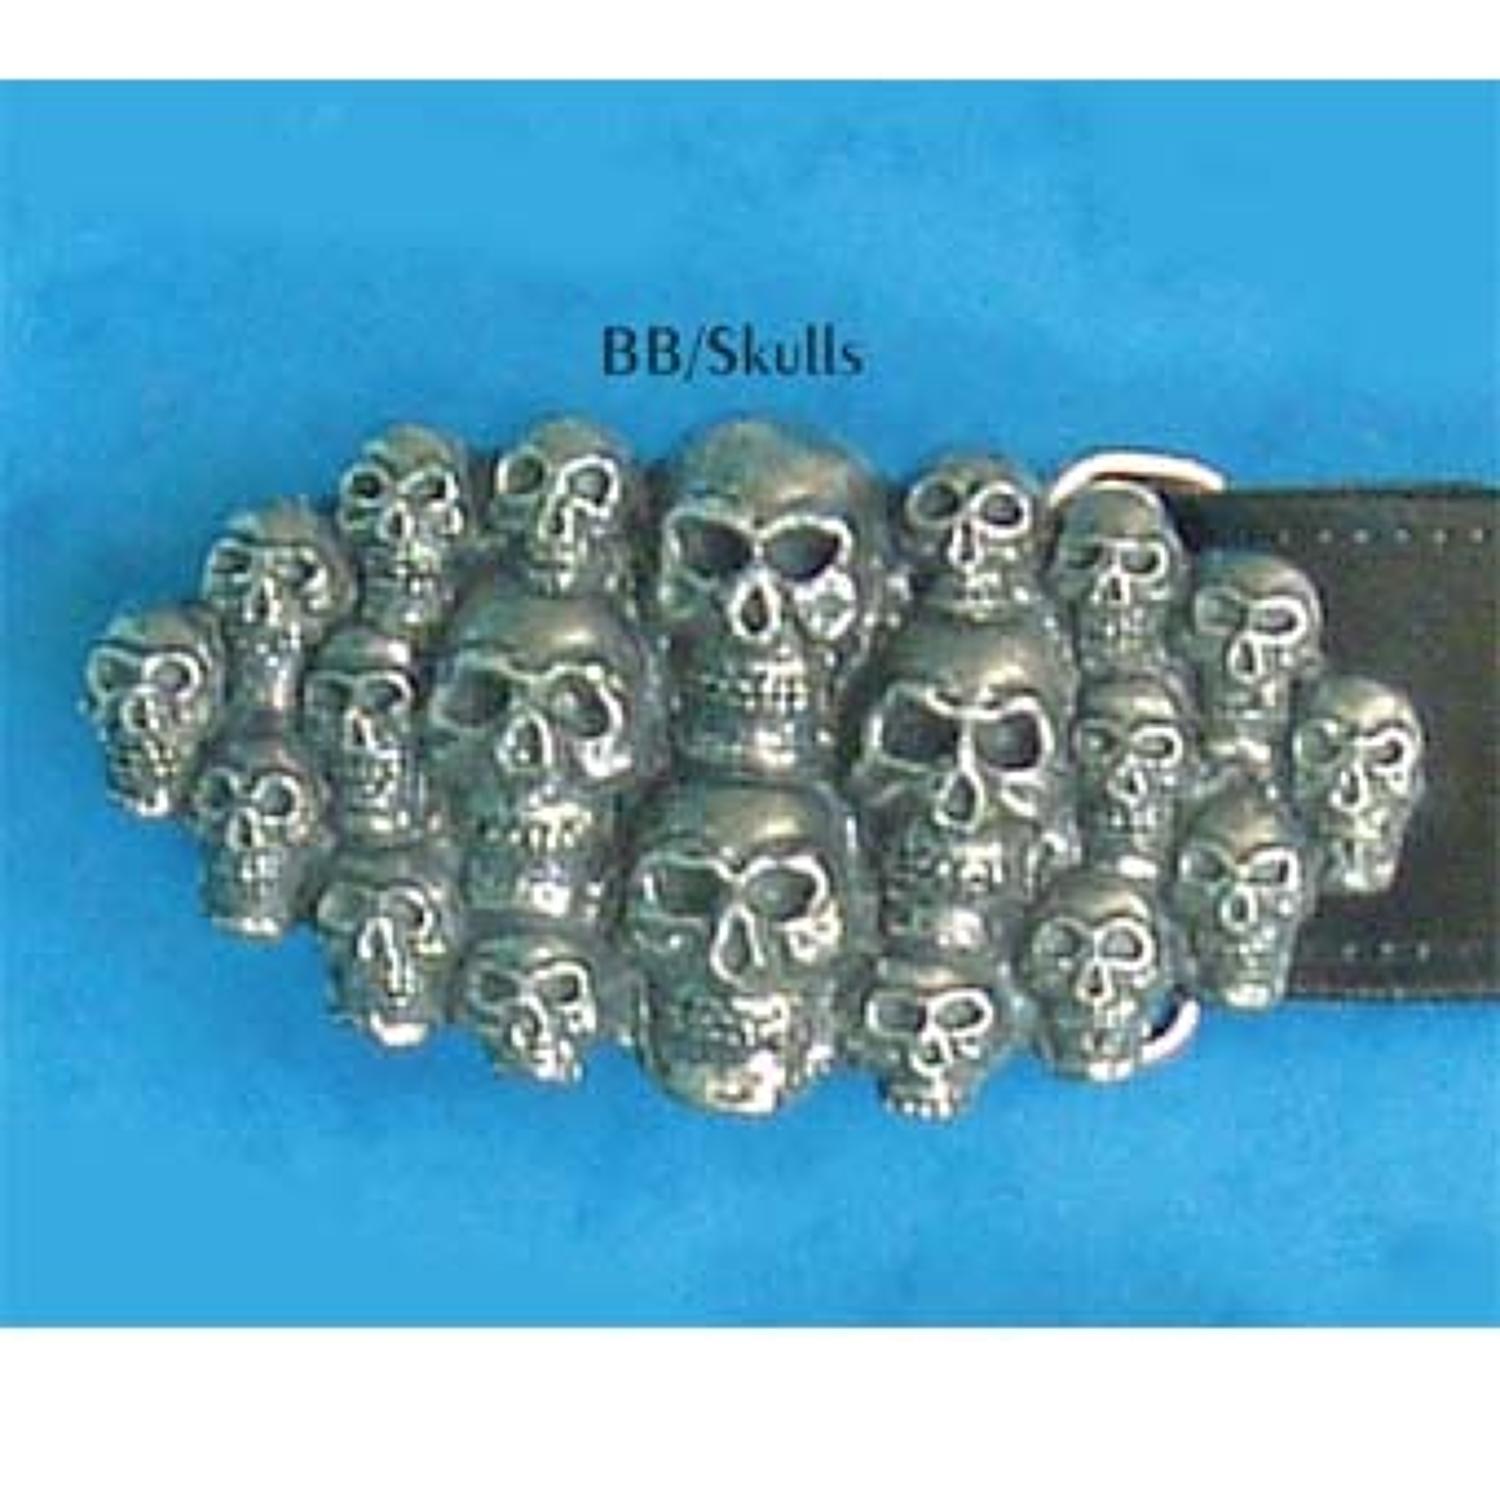 BB1239 Skulls